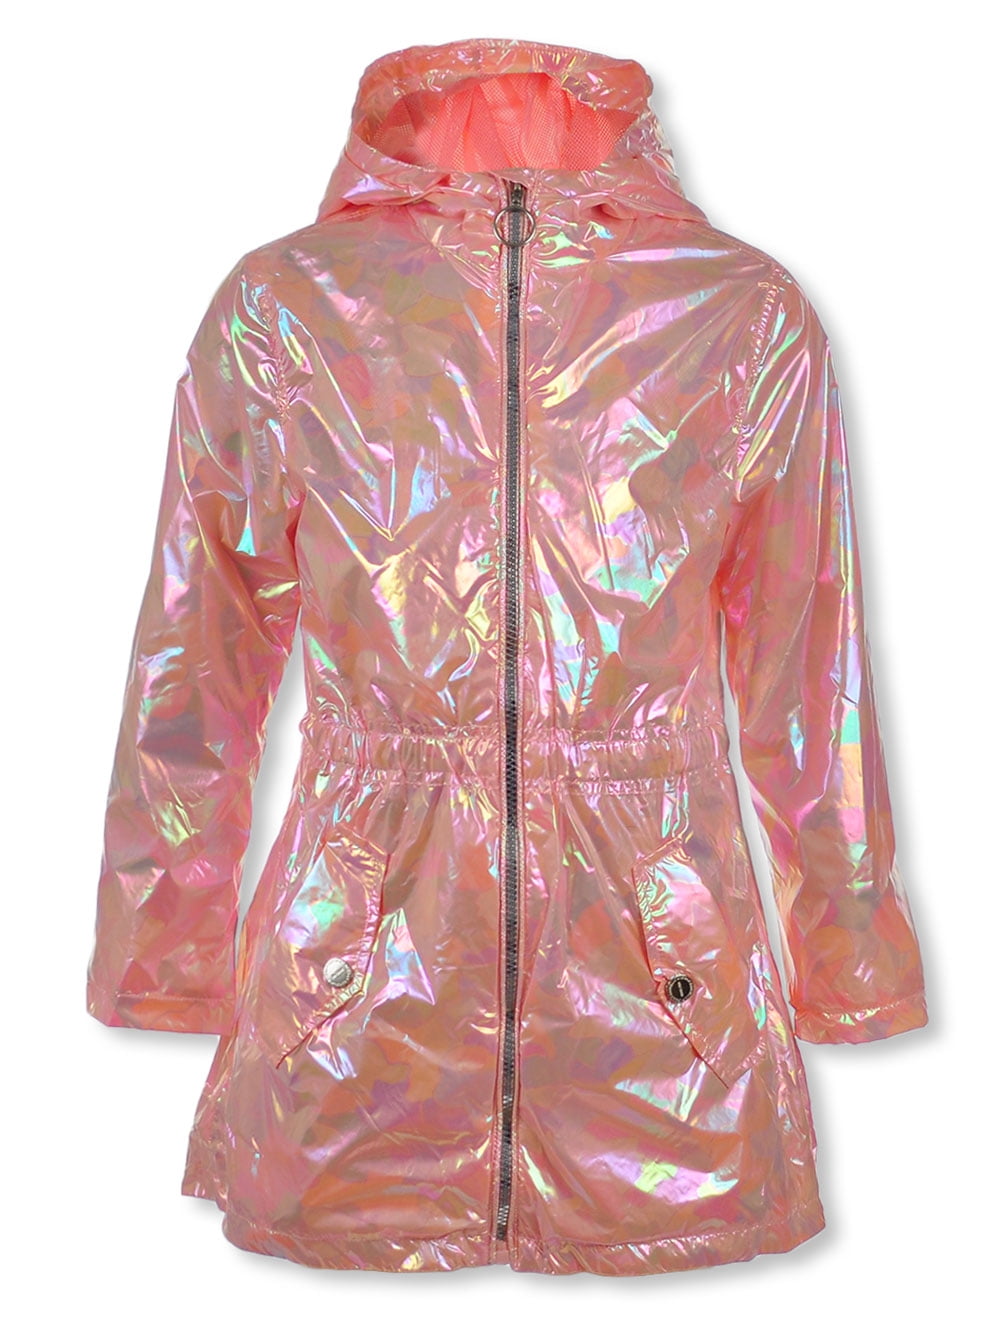 Girls Holographic Silver Jacket Showerproof Raincoat Mac Baby Girls to Teens 